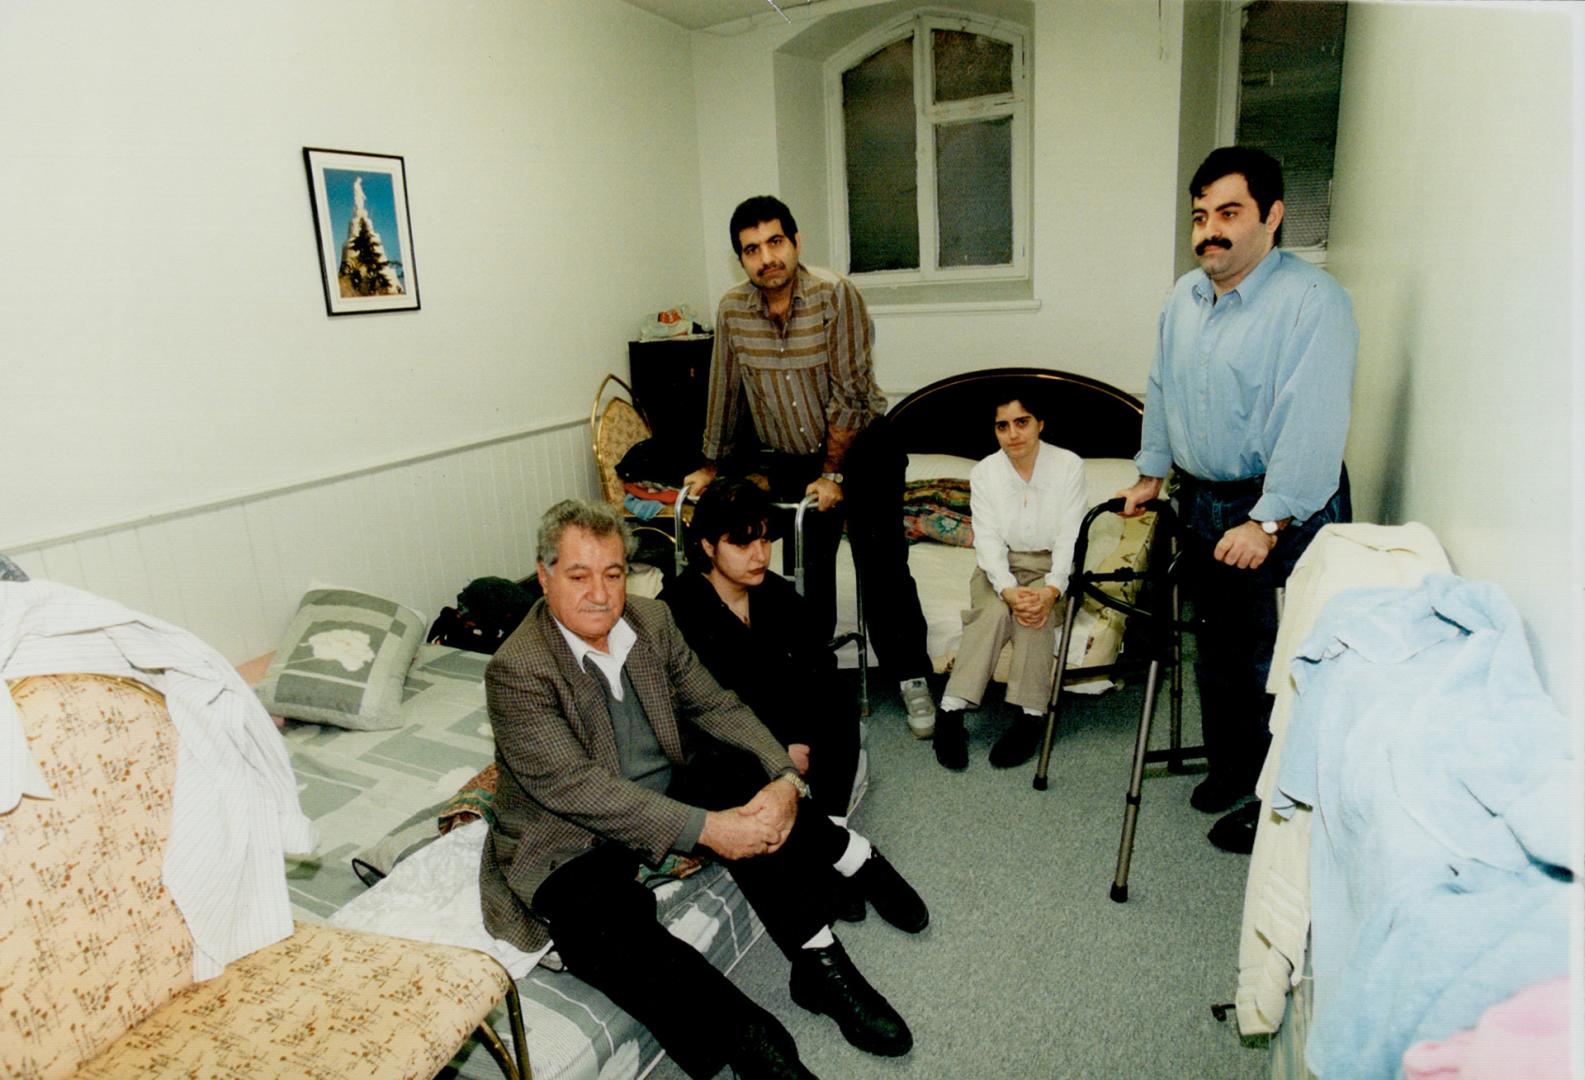 From left: Father Nadim, Children: Elham, Jamal, Faten, Anwar